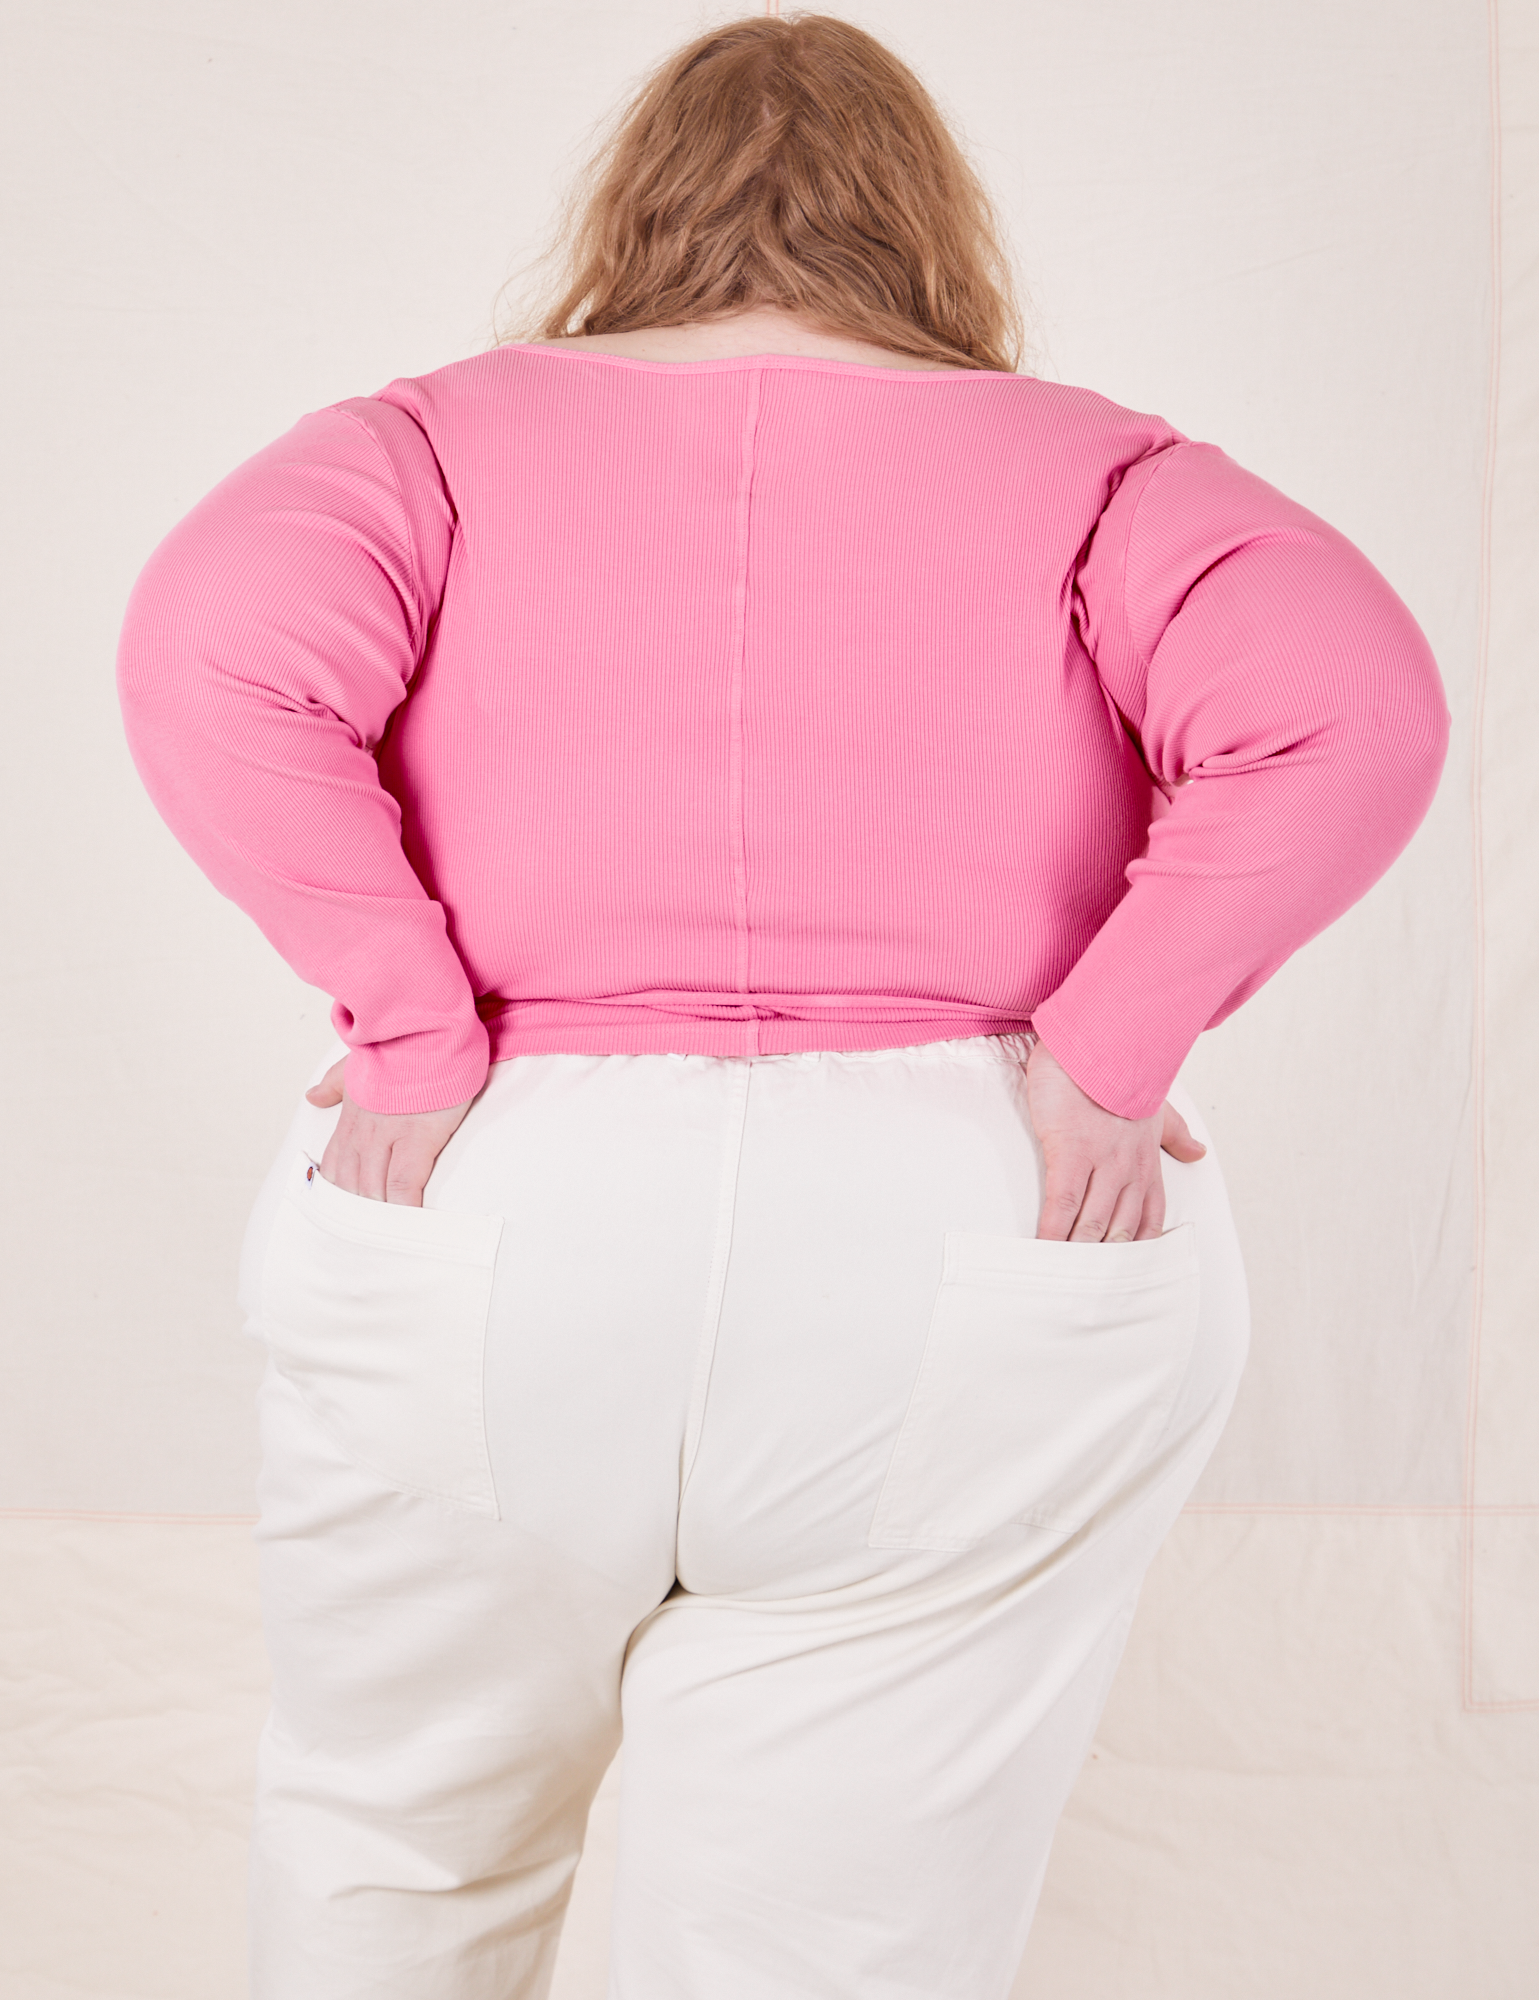 Wrap Top in Bubblegum Pink back view on Catie wearing vintage tee off-white Western Pants